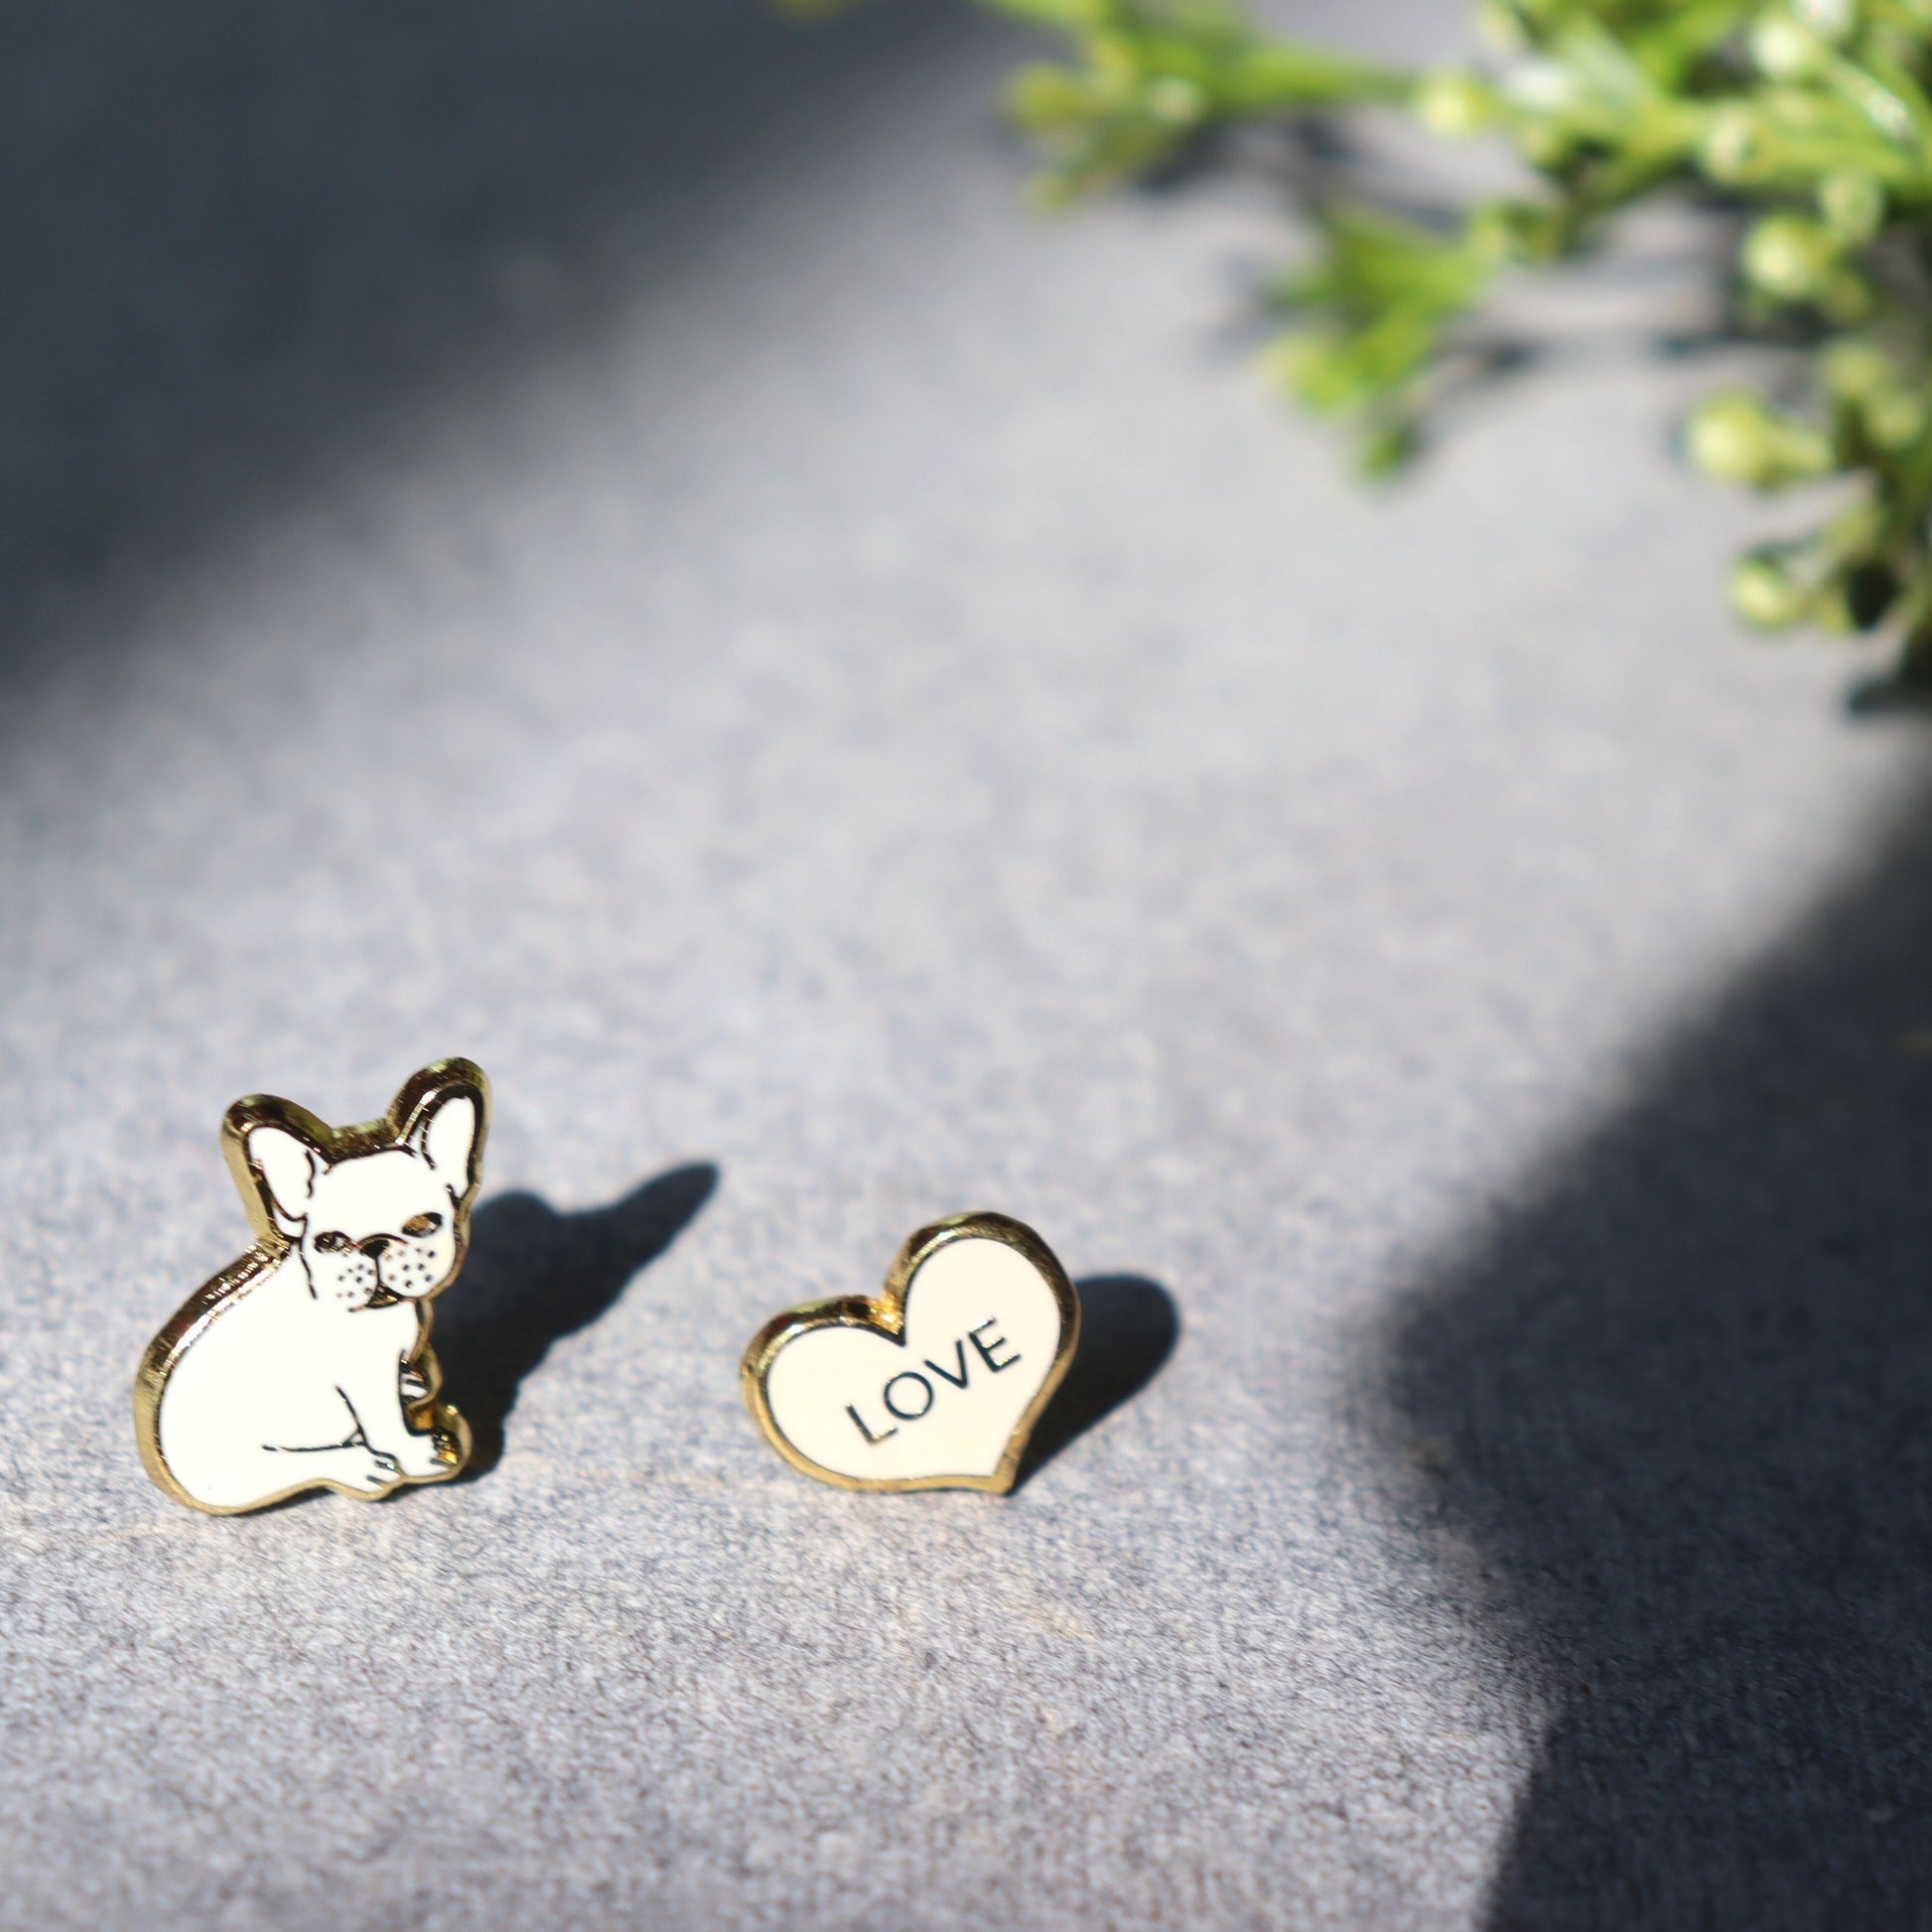 White Bulldog & Pink Love Heart Chic Earrings - Small Studs, Dog Animal Lovers - Aksa Home Decor 